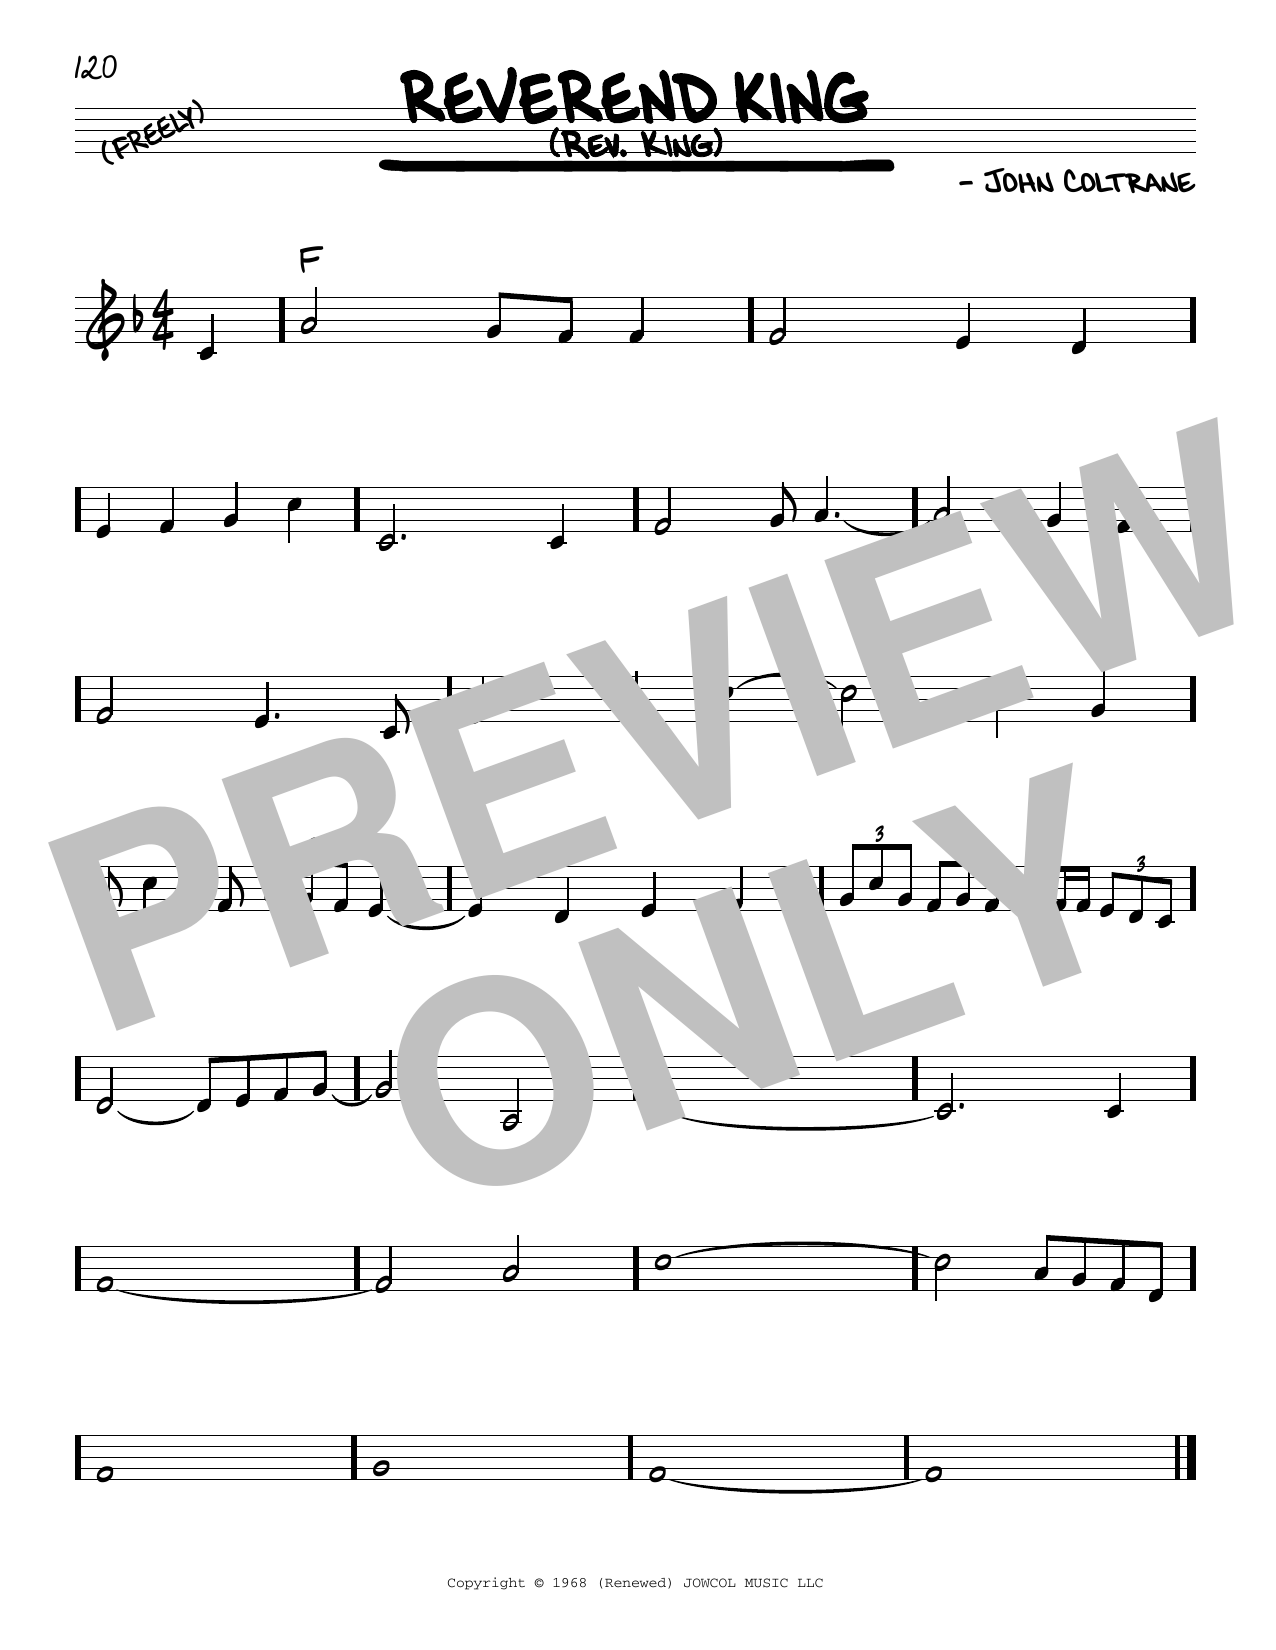 John Coltrane Reverend King (Rev. King) Sheet Music Notes & Chords for Real Book – Melody & Chords - Download or Print PDF